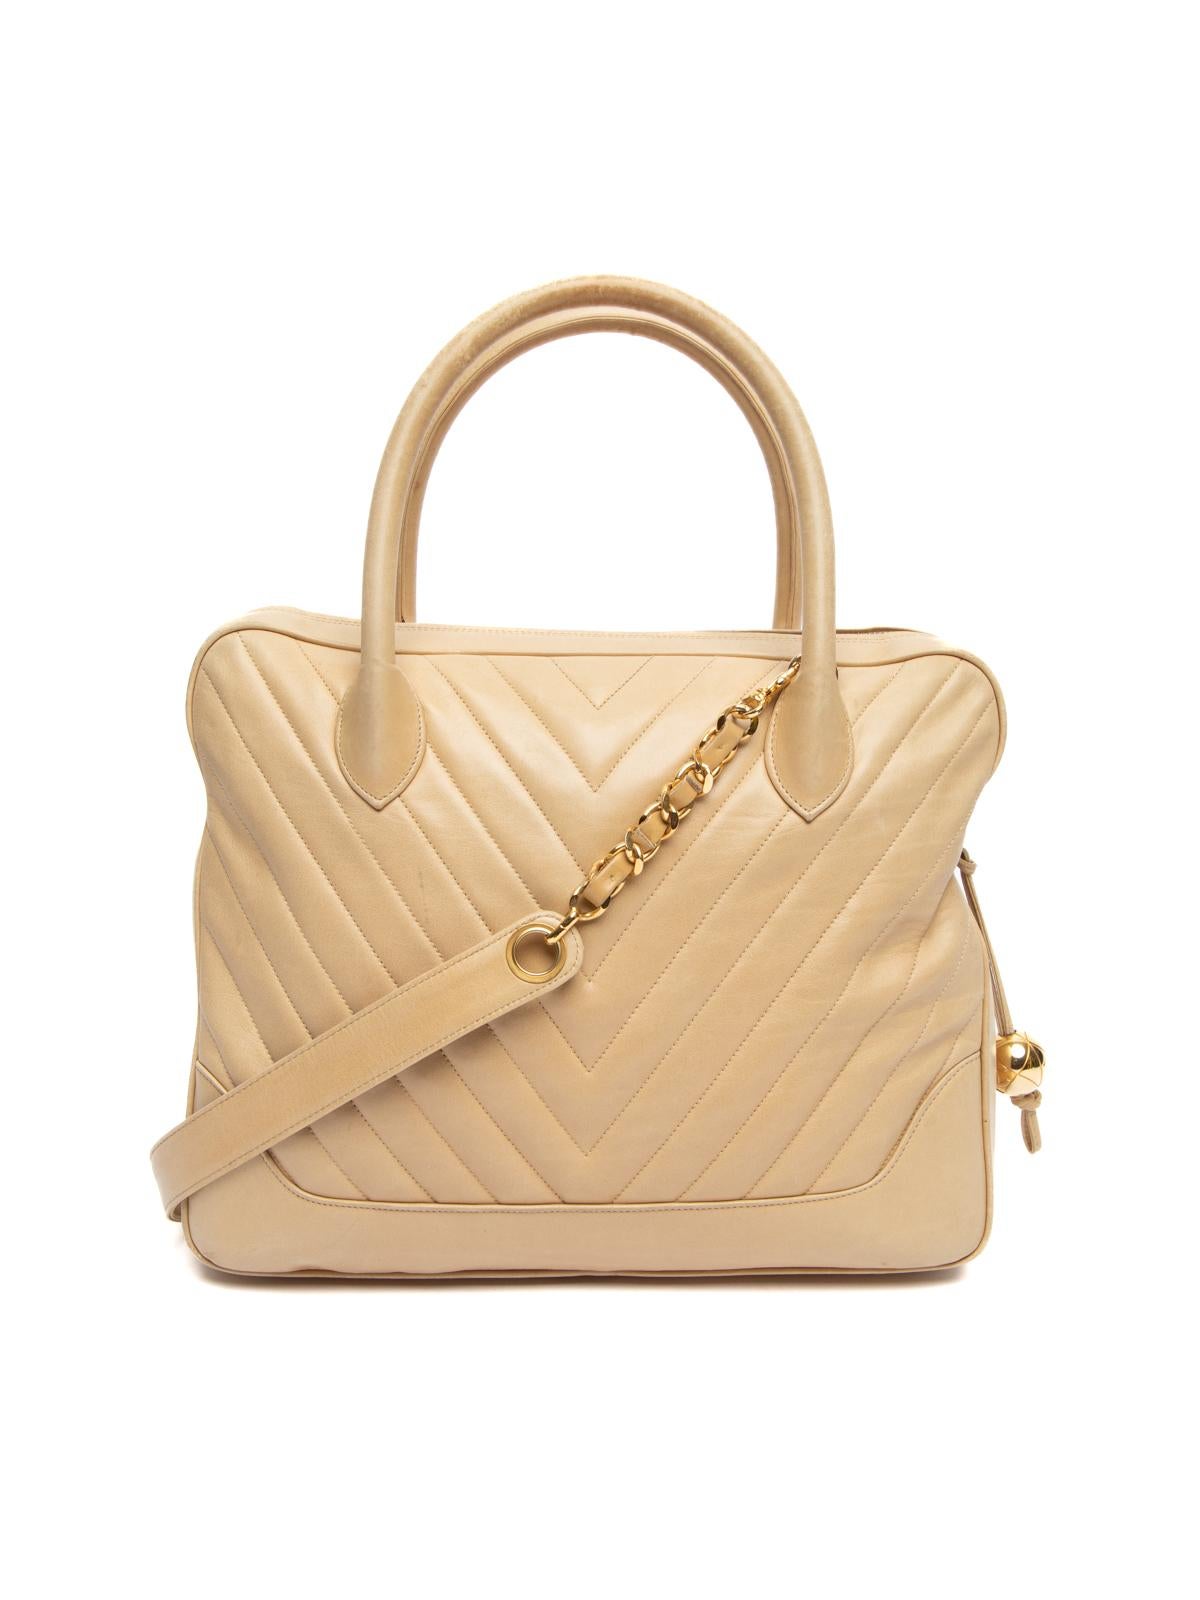 Chanel Women's Vintage Chevron Gold Hardware Top Handle Bag Beige 4